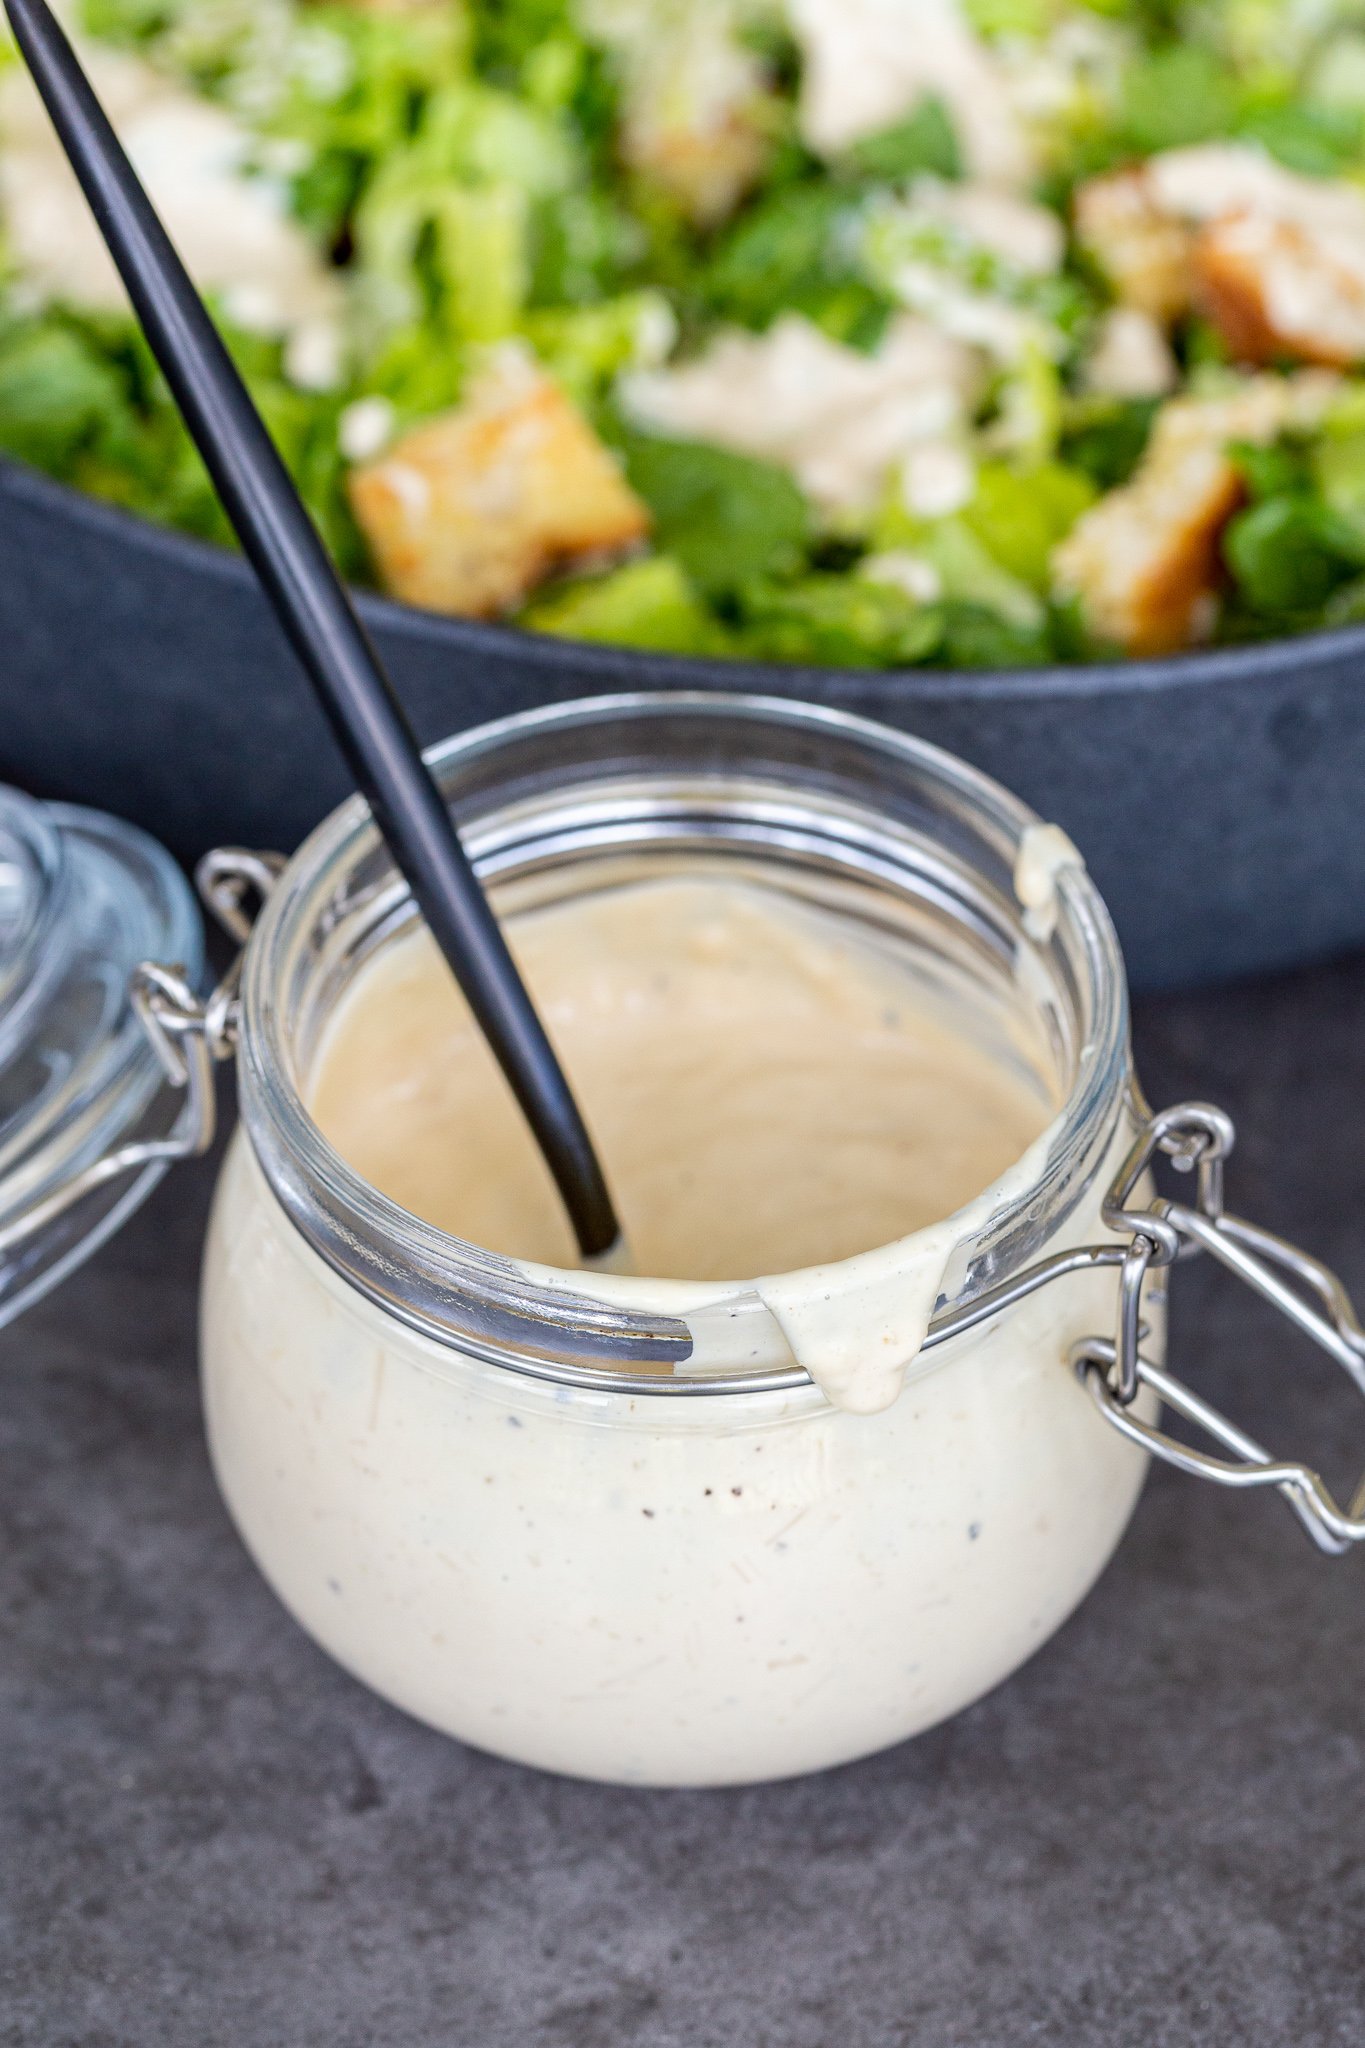 https://cdn.momsdish.com/wp-content/uploads/2021/07/Homemade-Creamy-Caesar-Salad-Dressing-08.jpg